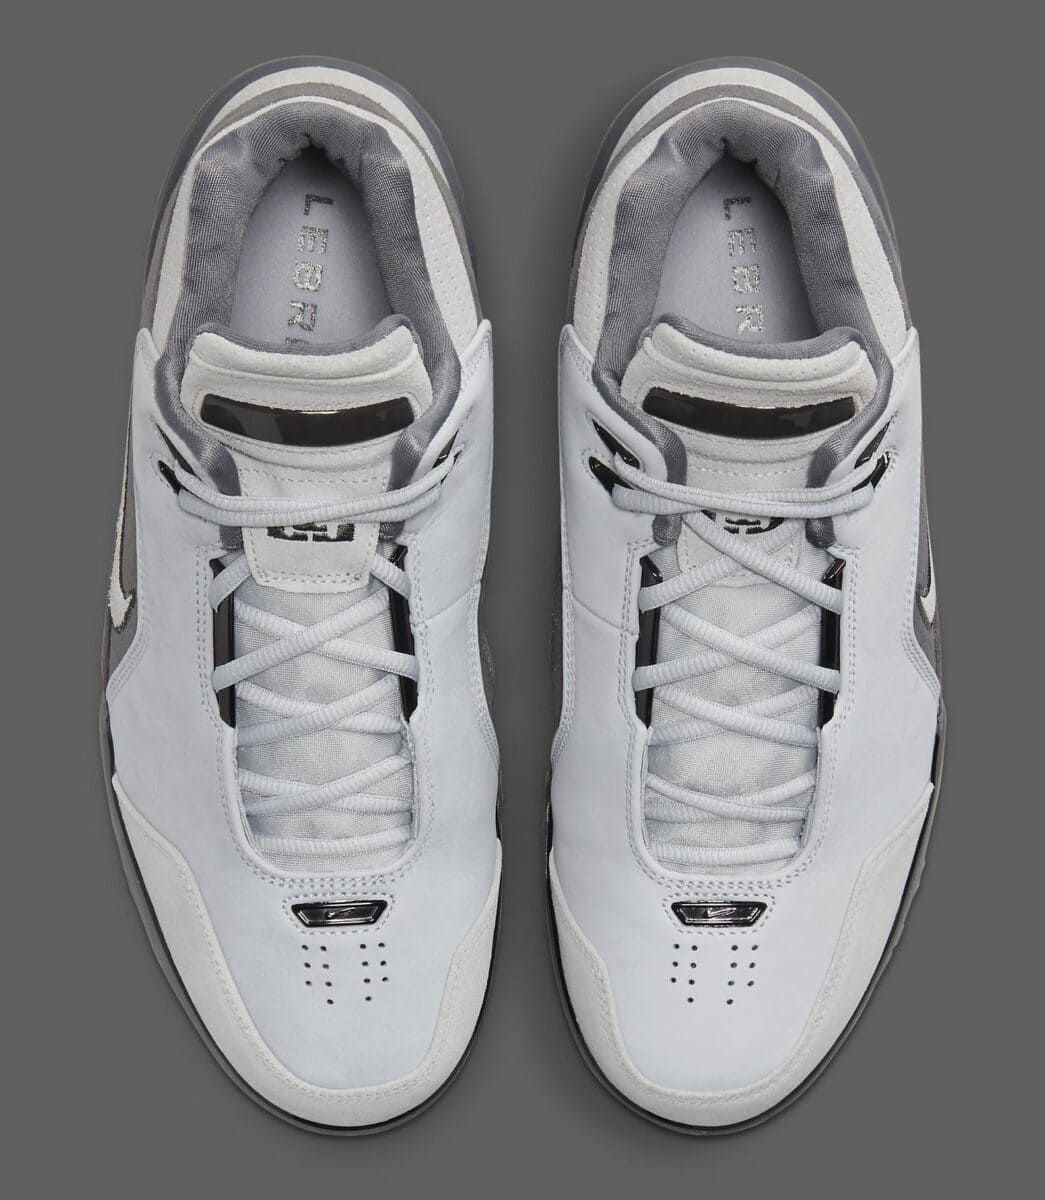 LeBron James sneakers